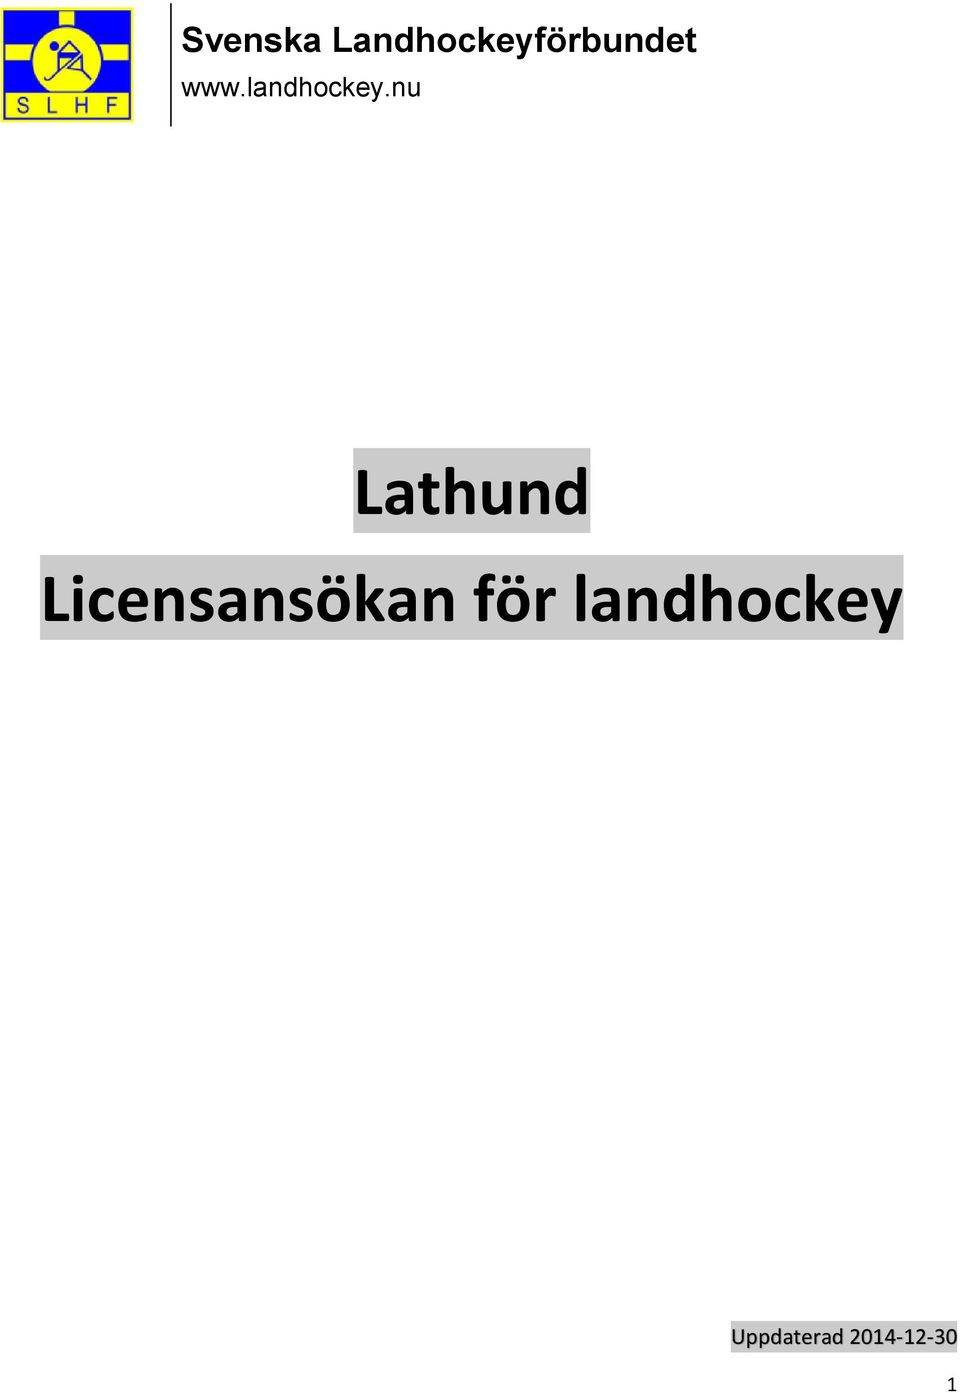 landhockey.